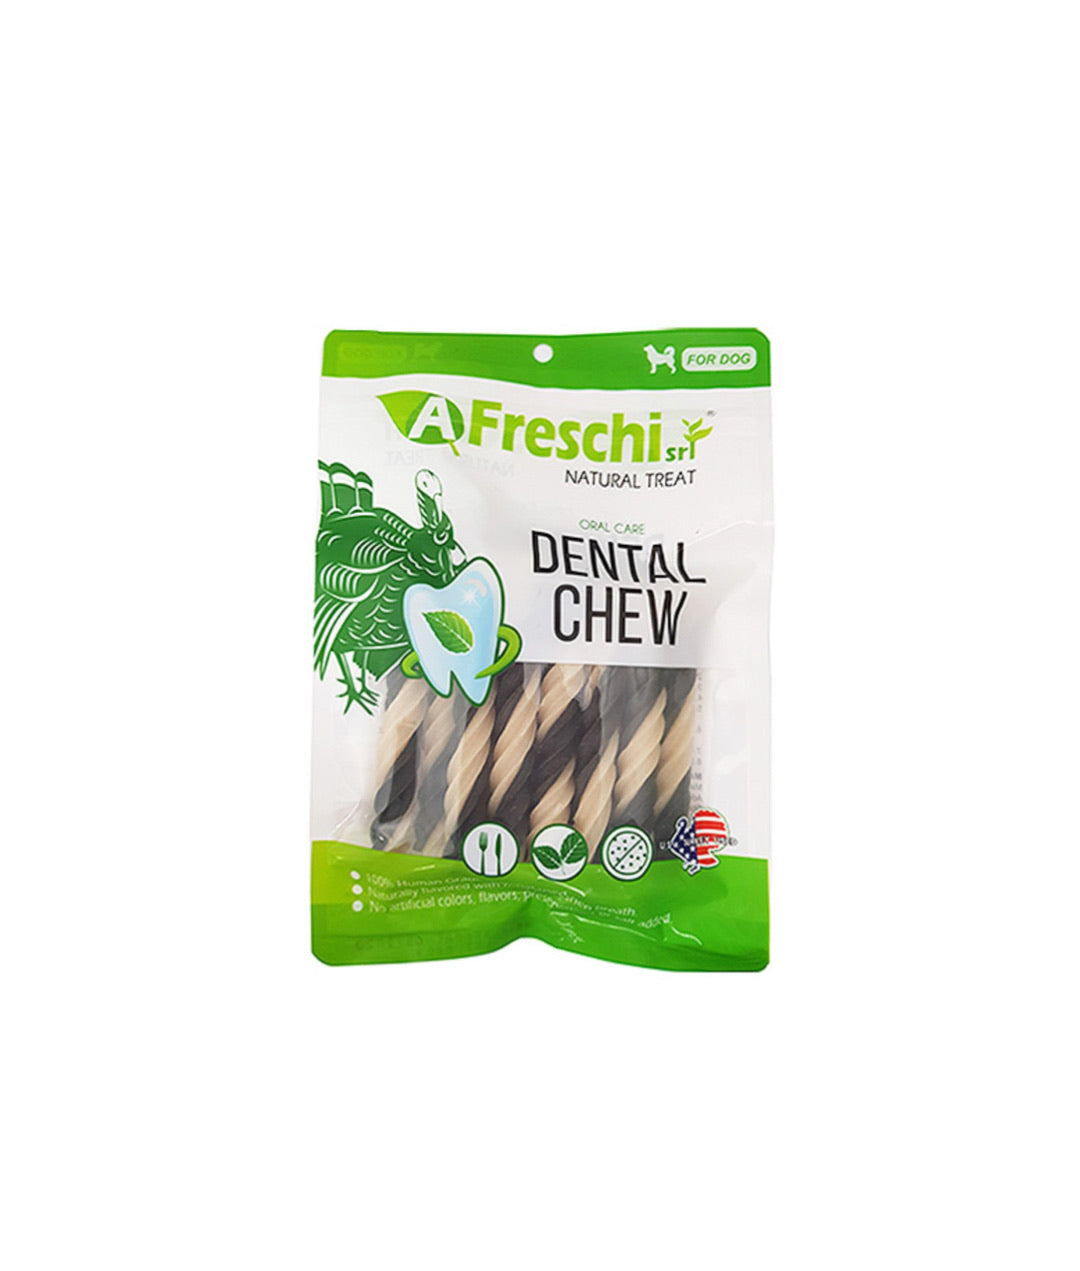 AFreschi Twisted Dental Chew Turkey & Calcium